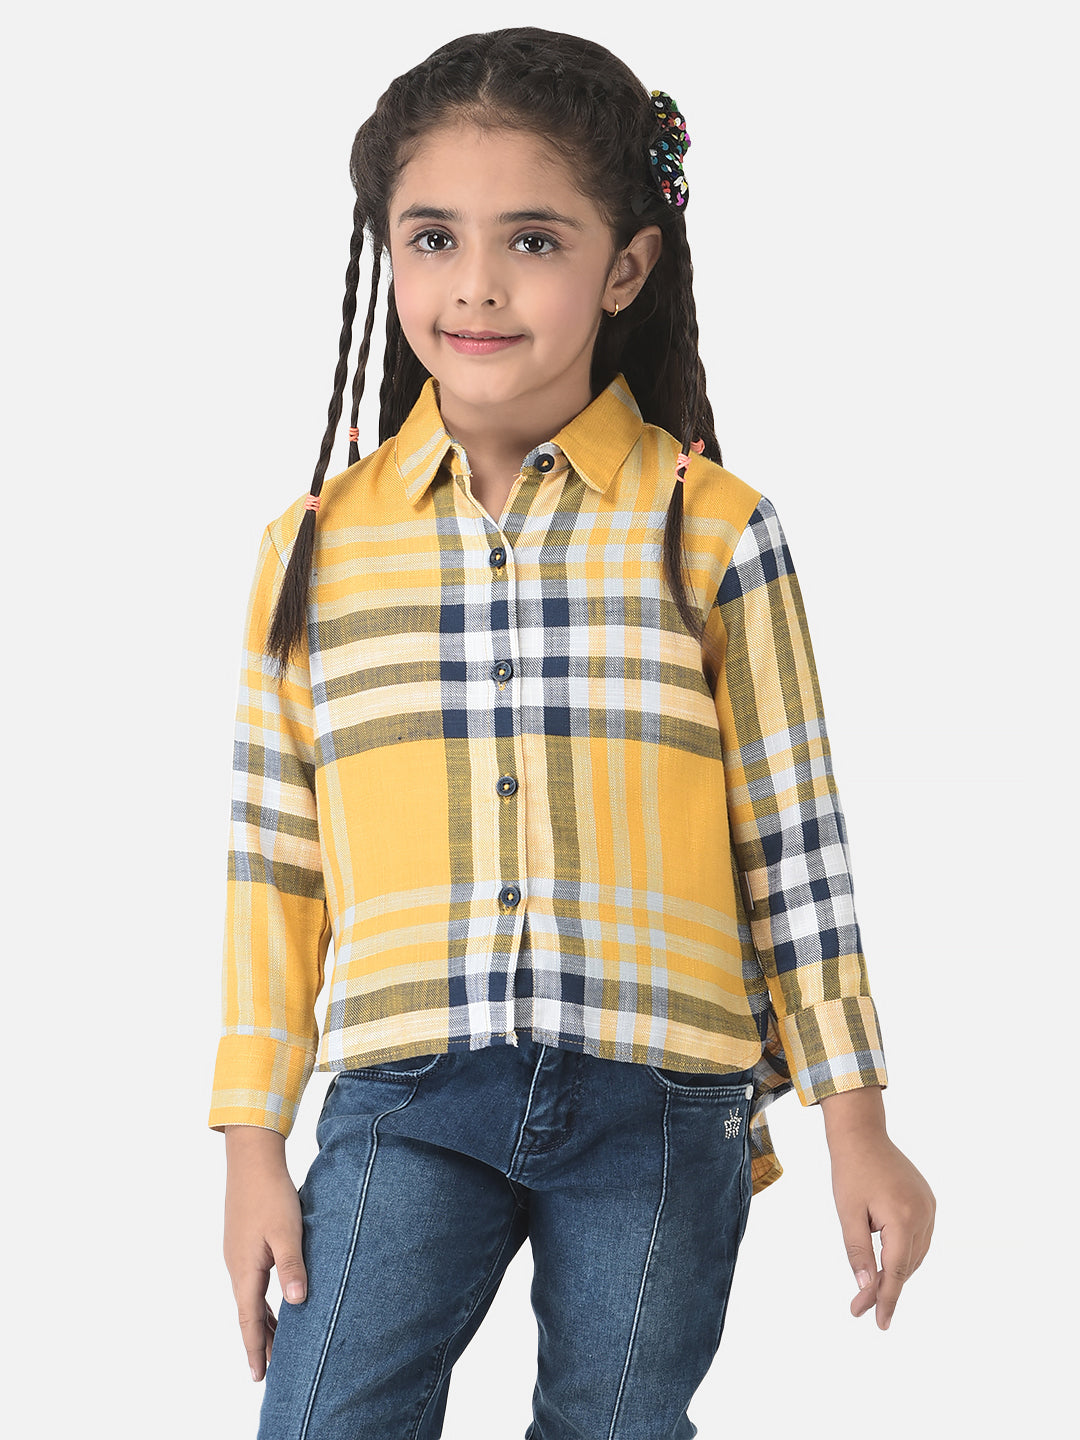  Cropped Yellow Shirt with Tartan Checks 